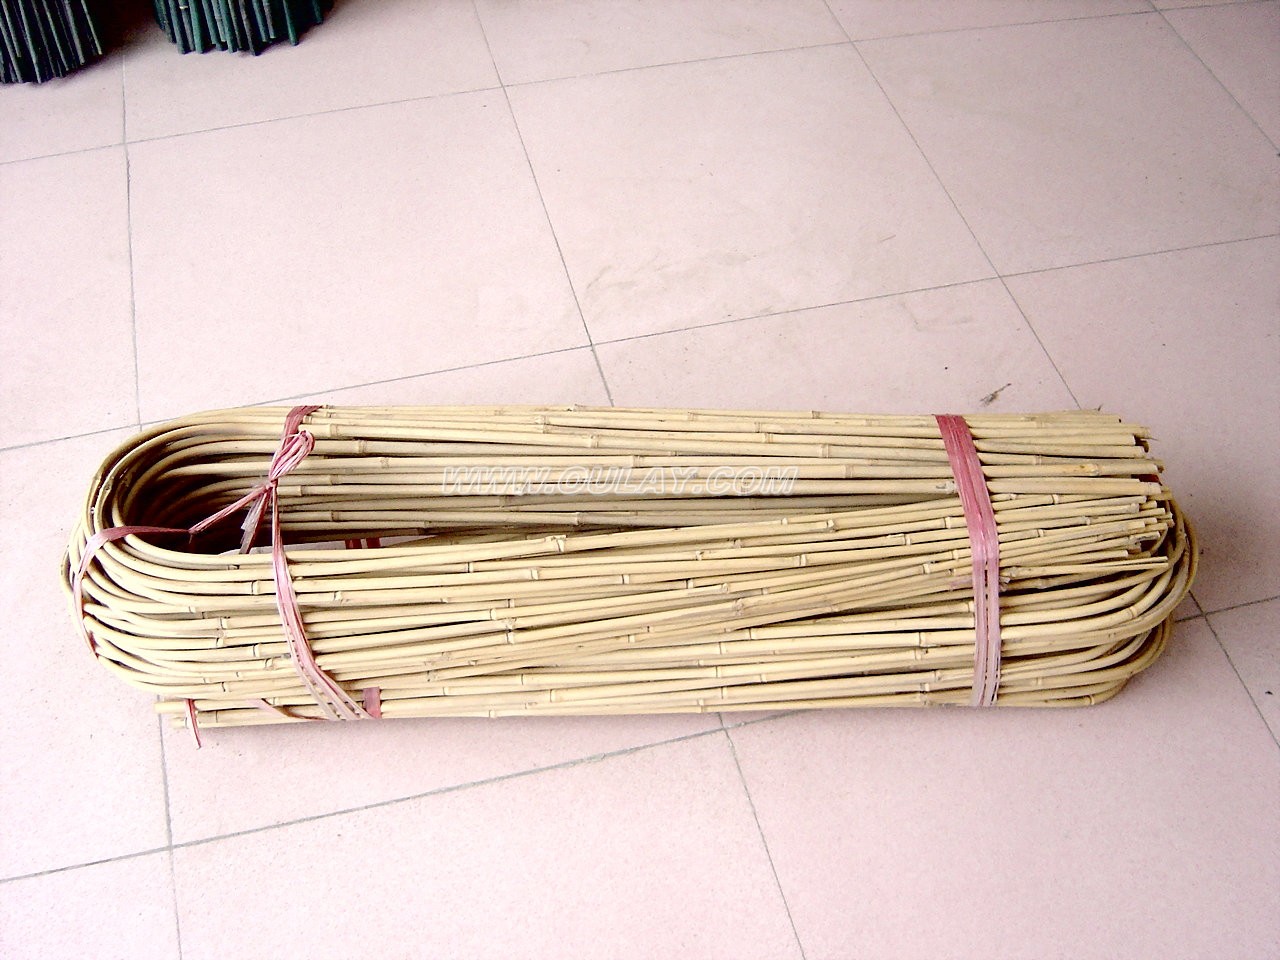 U shape bamboo